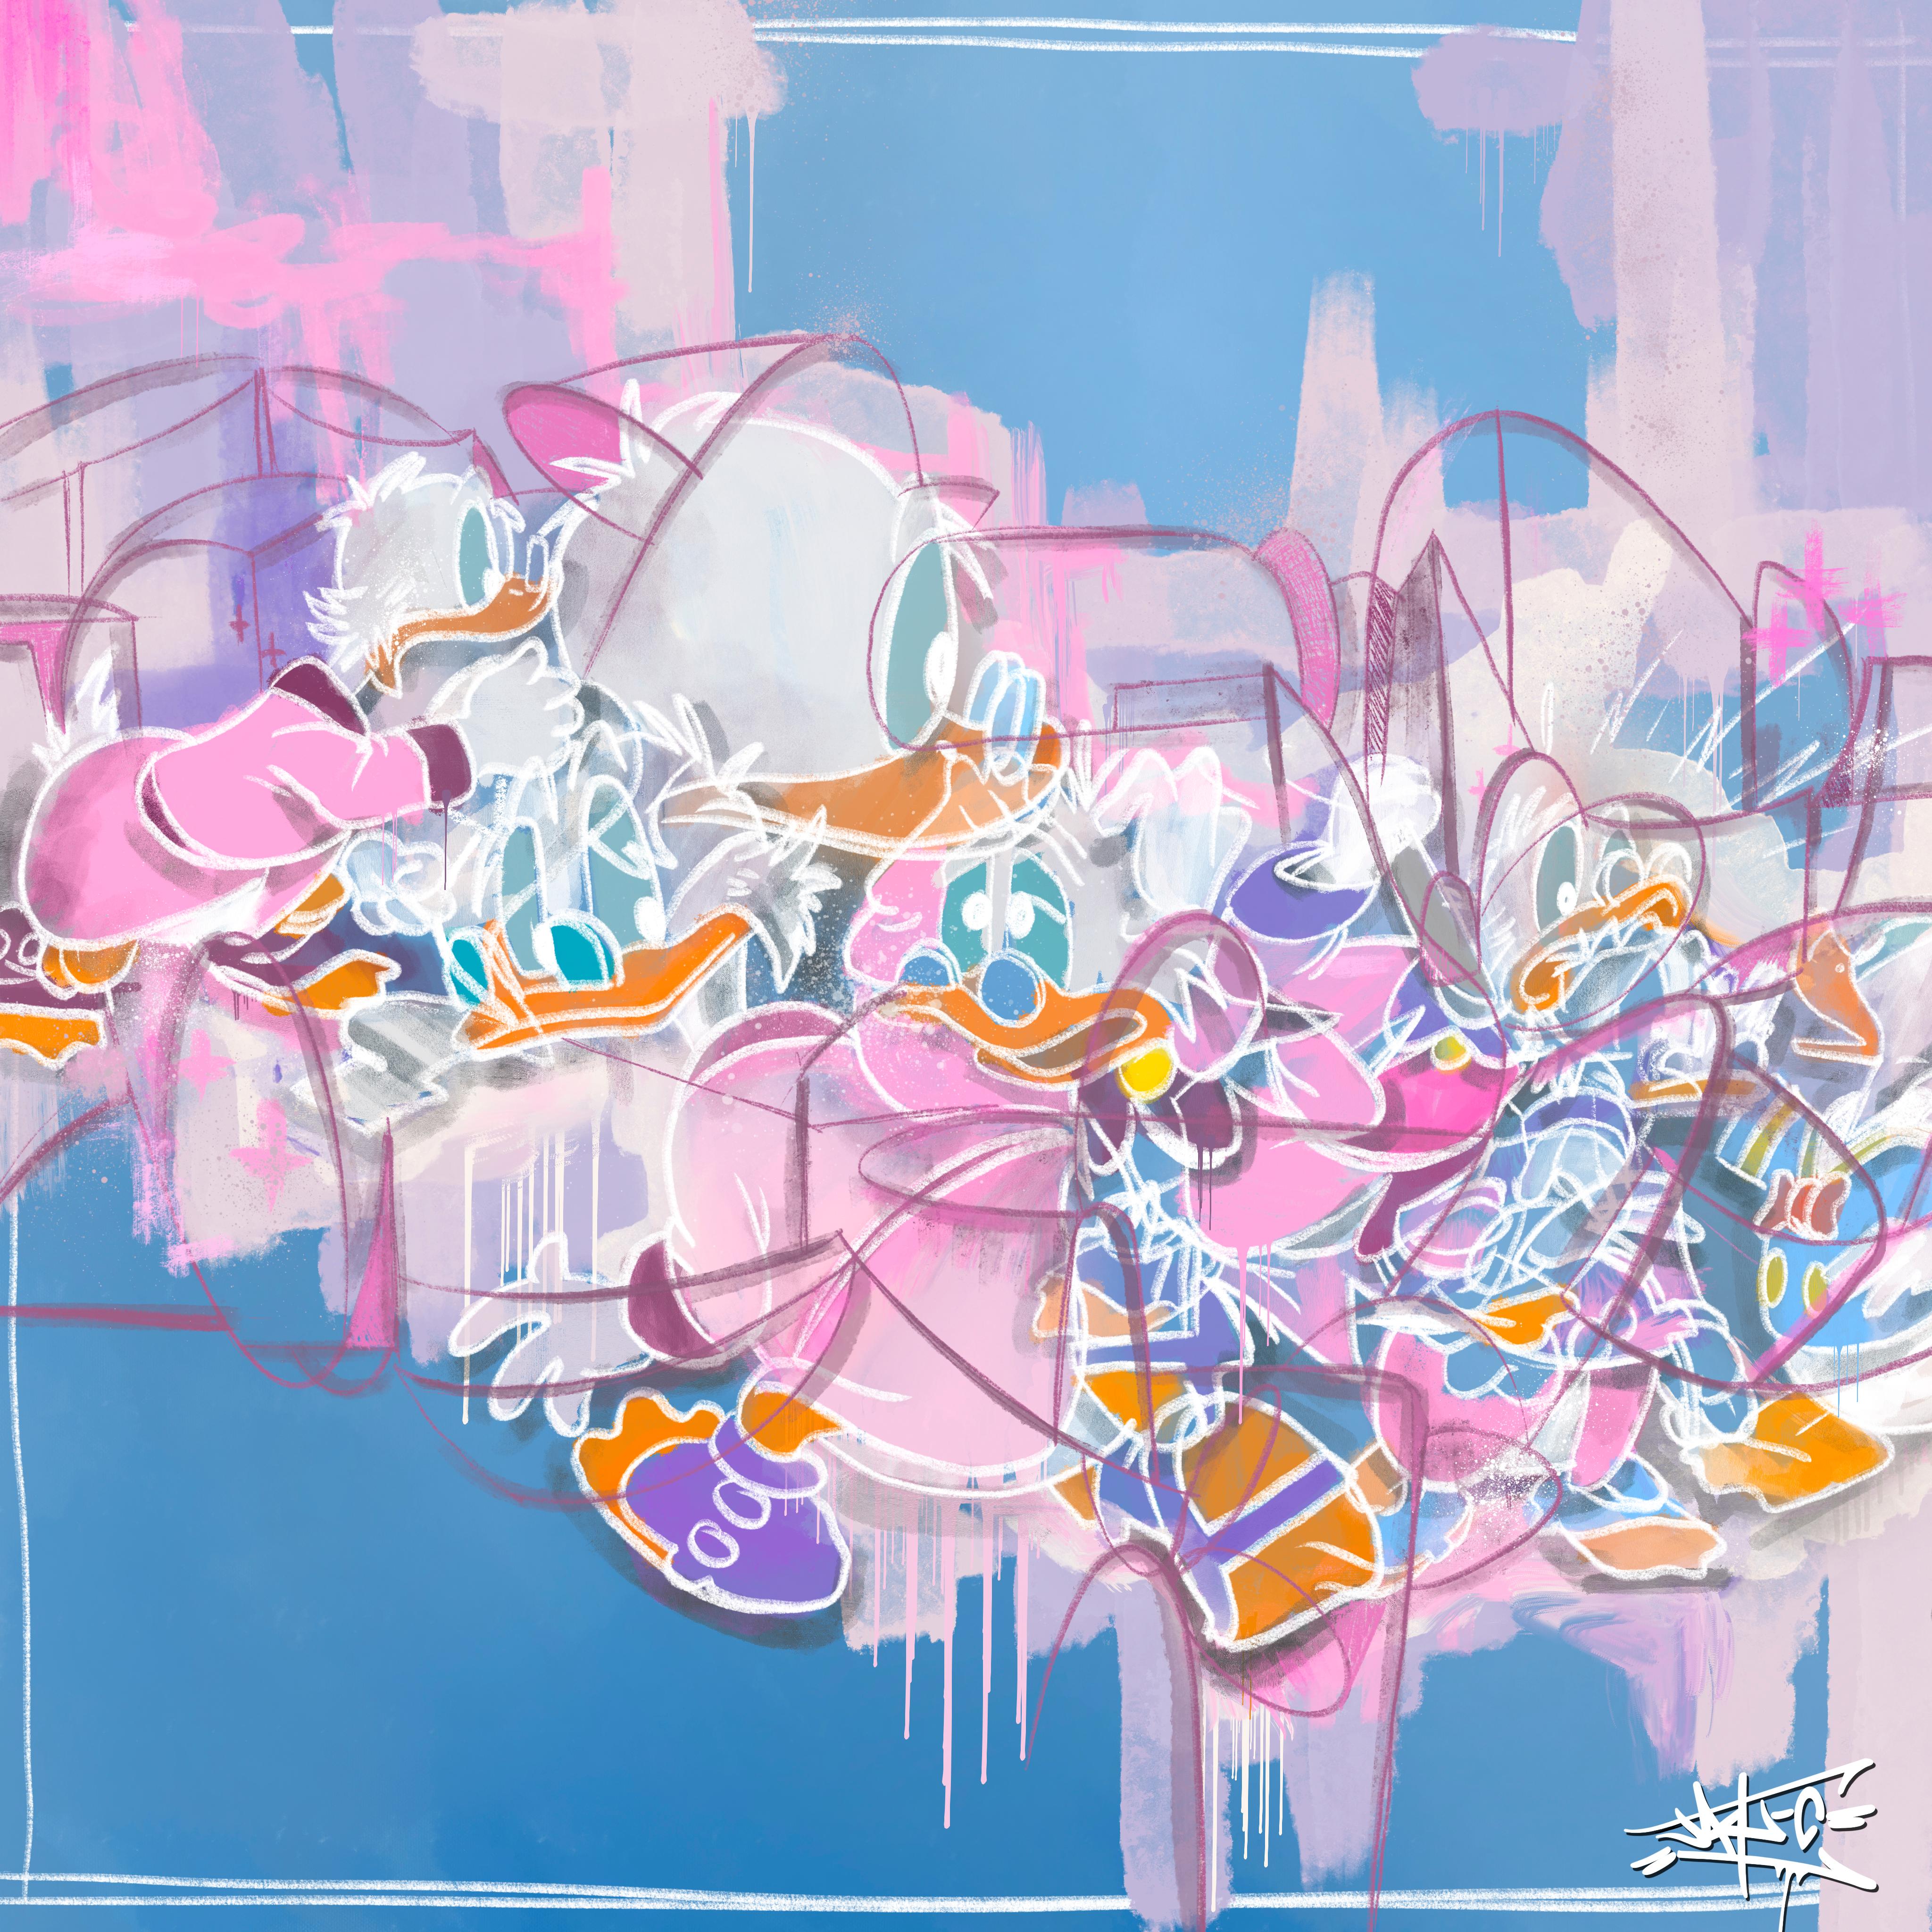 Jay-C Animal Print - Fluffy Ducks! Pop Art, Street Art